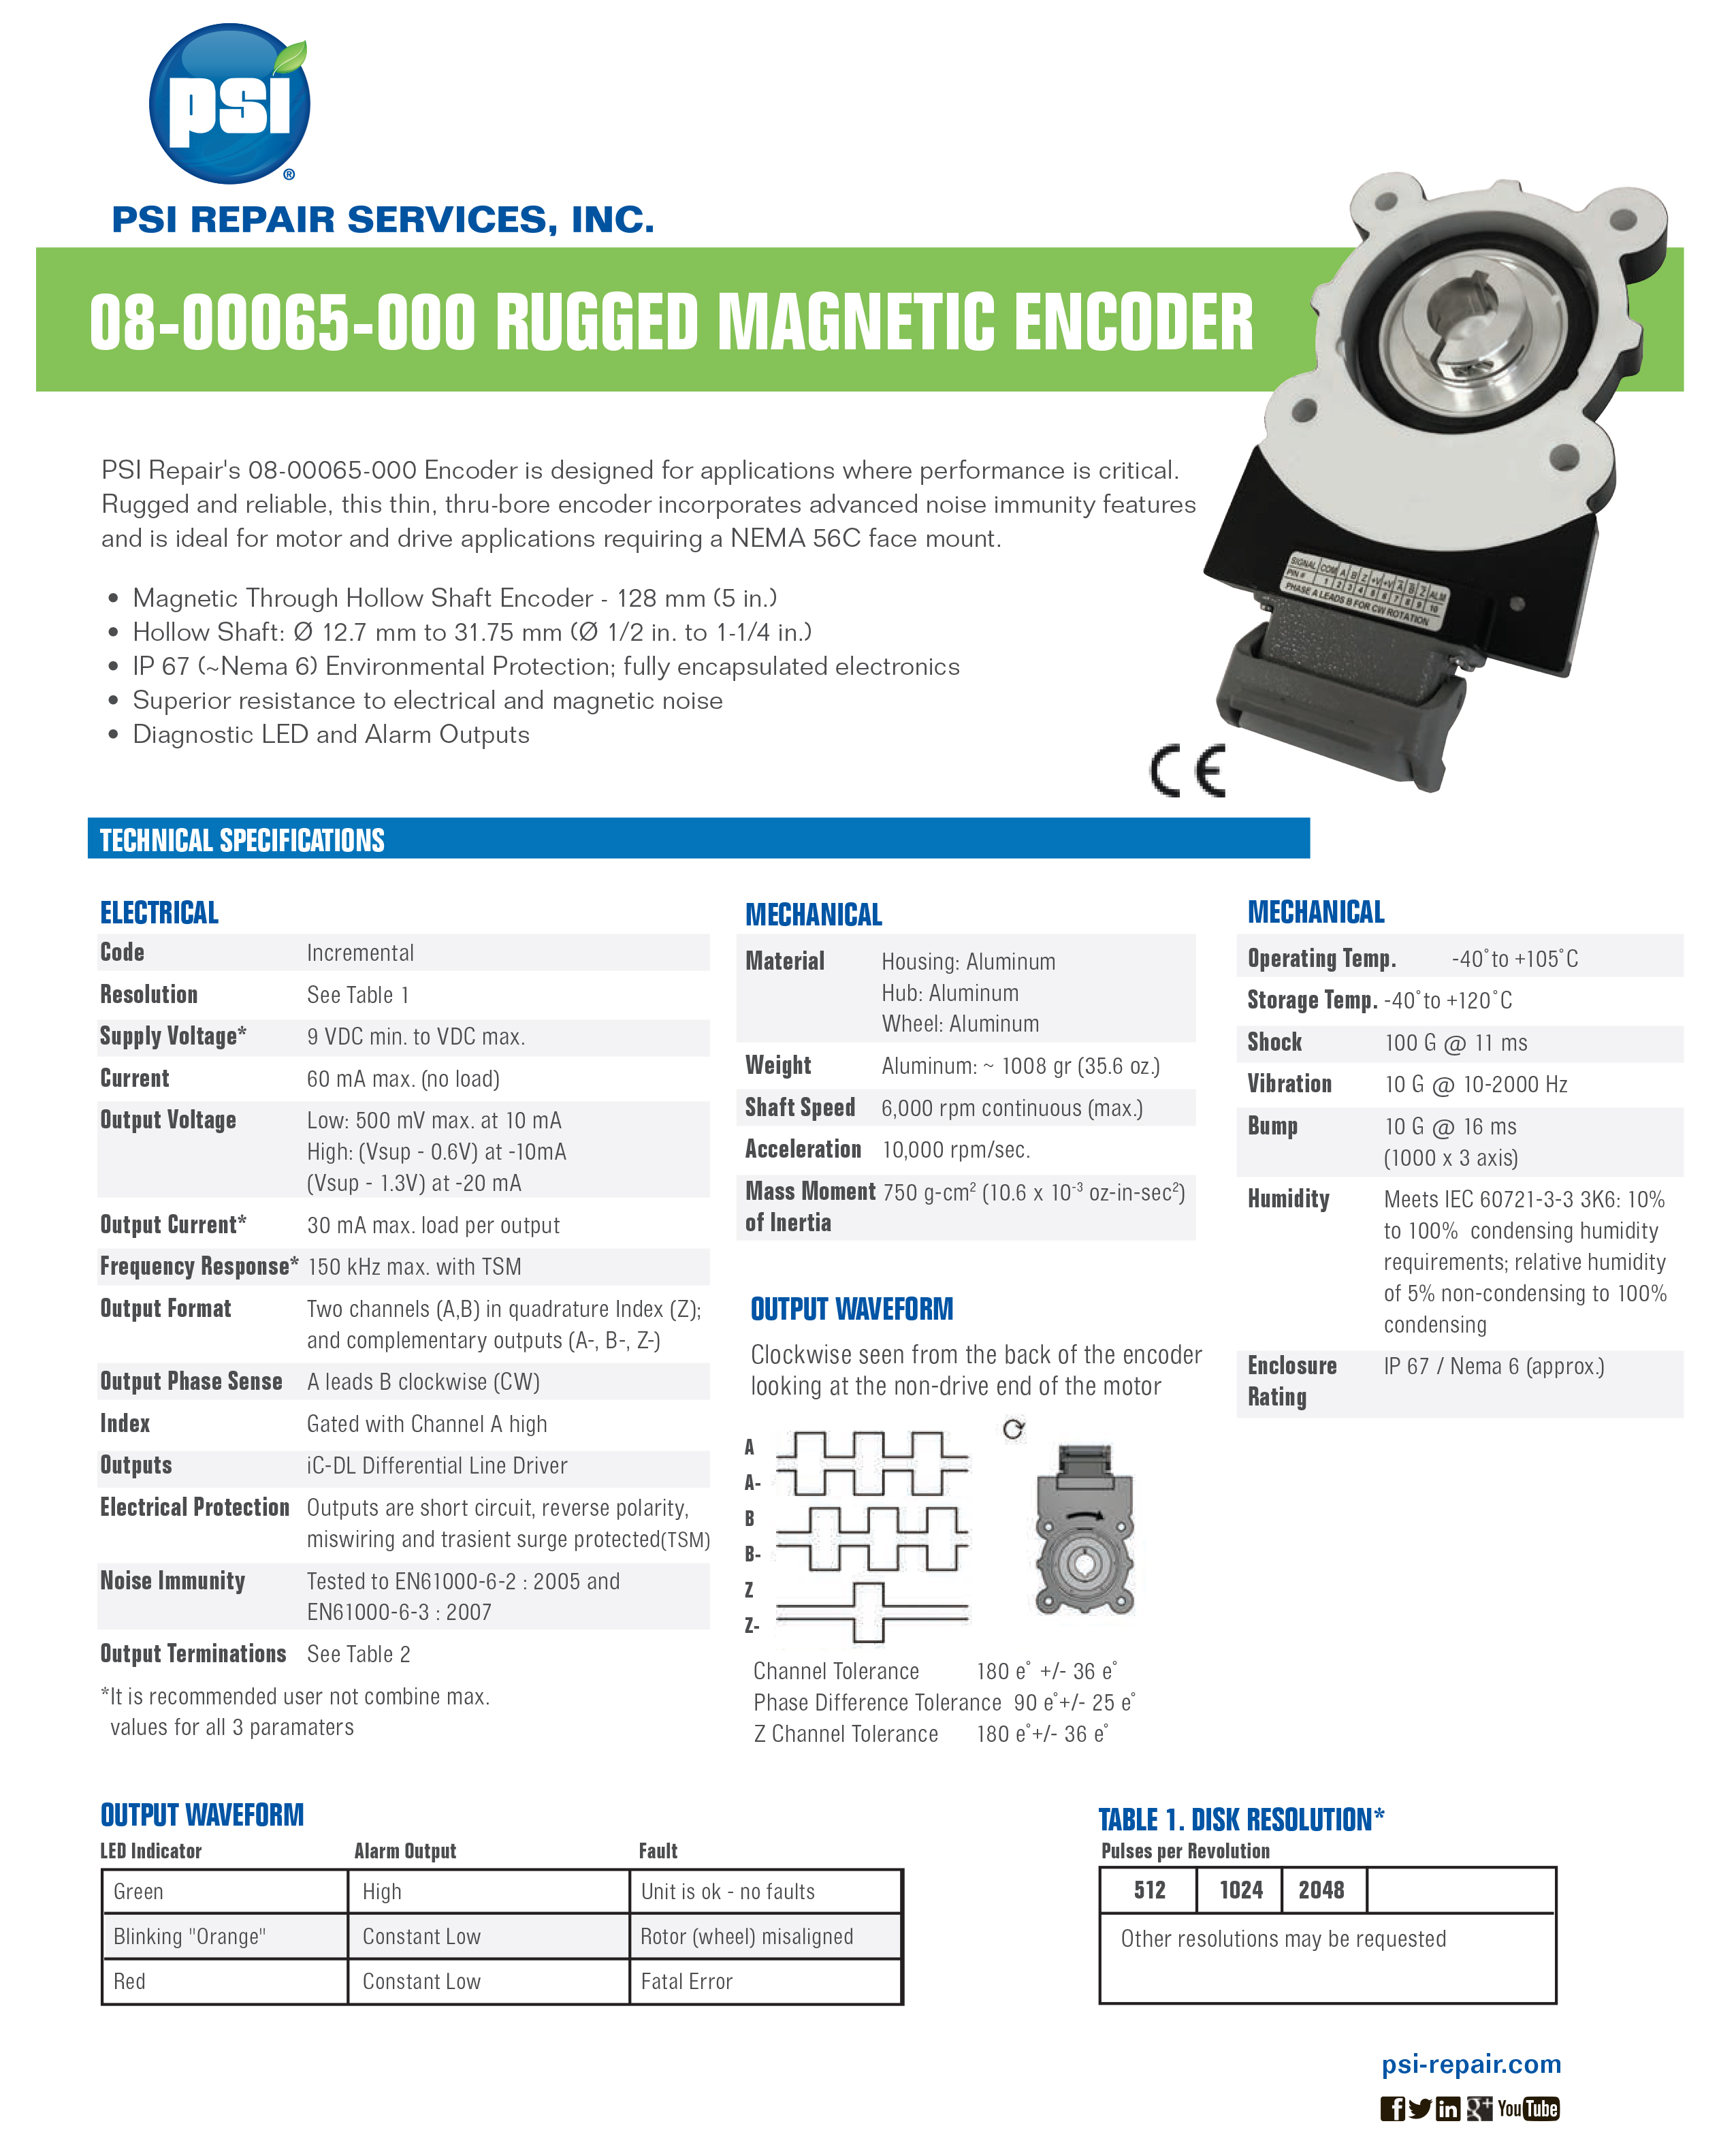 Rugged Magnetic Encoder